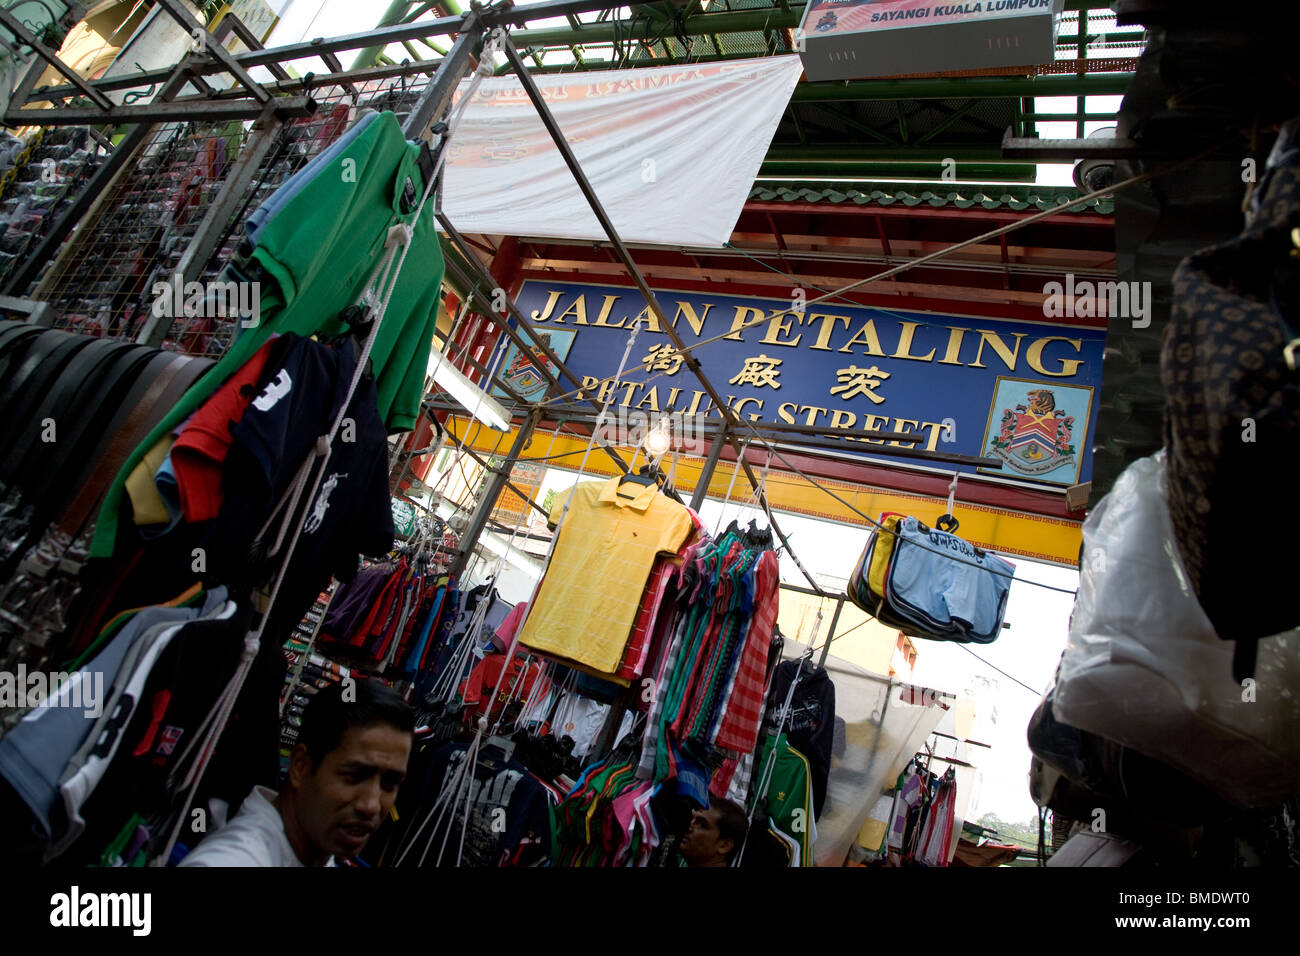 Petaling street market kuala lumpur malaysia sign Stock Photo